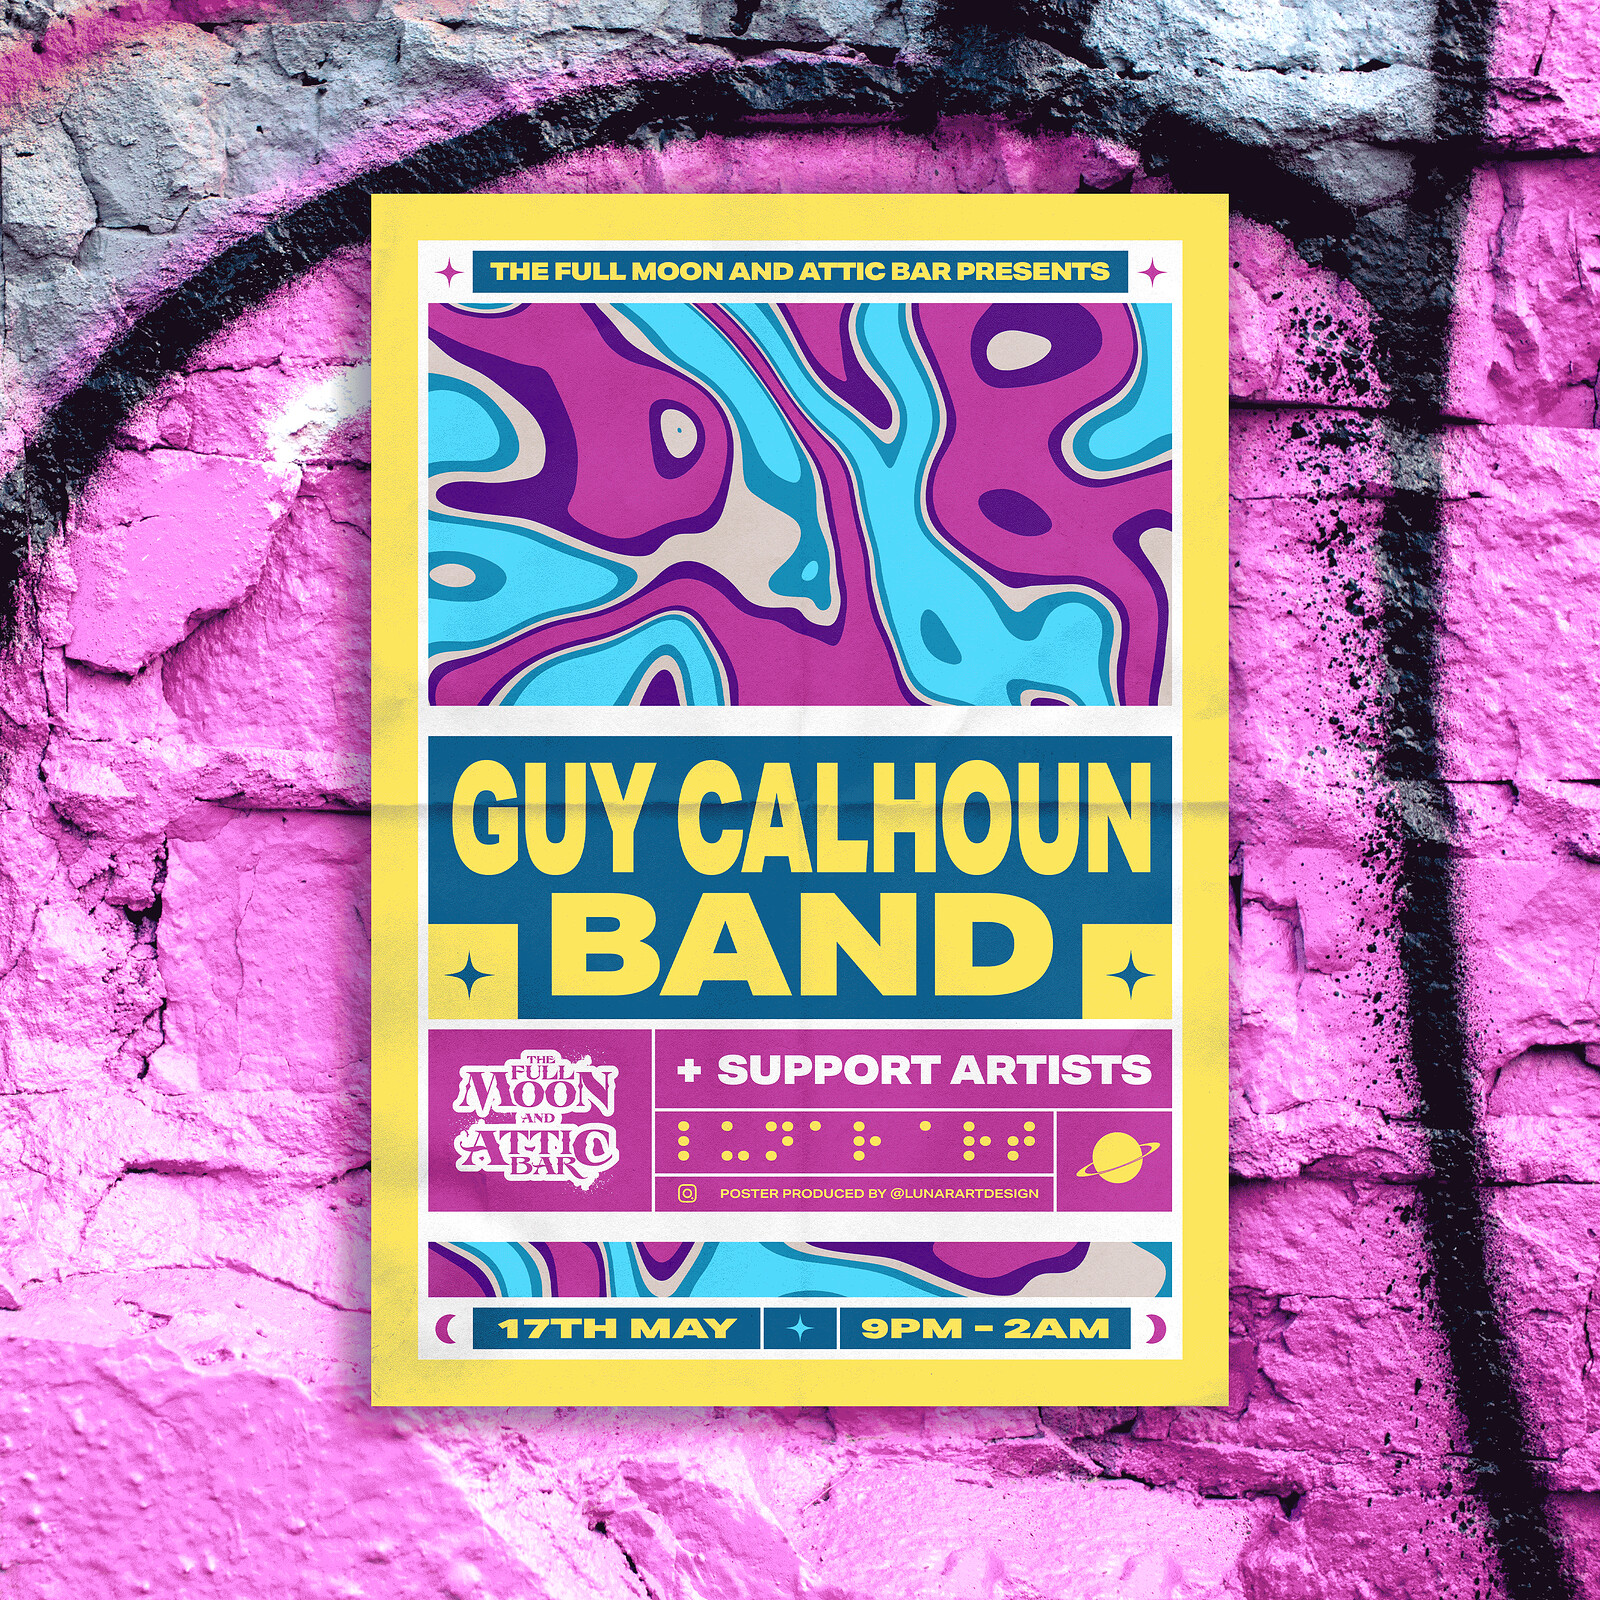 Guy Calhoun Band + Support Artists | Attic Bar at The Full Moon & Attic Bar